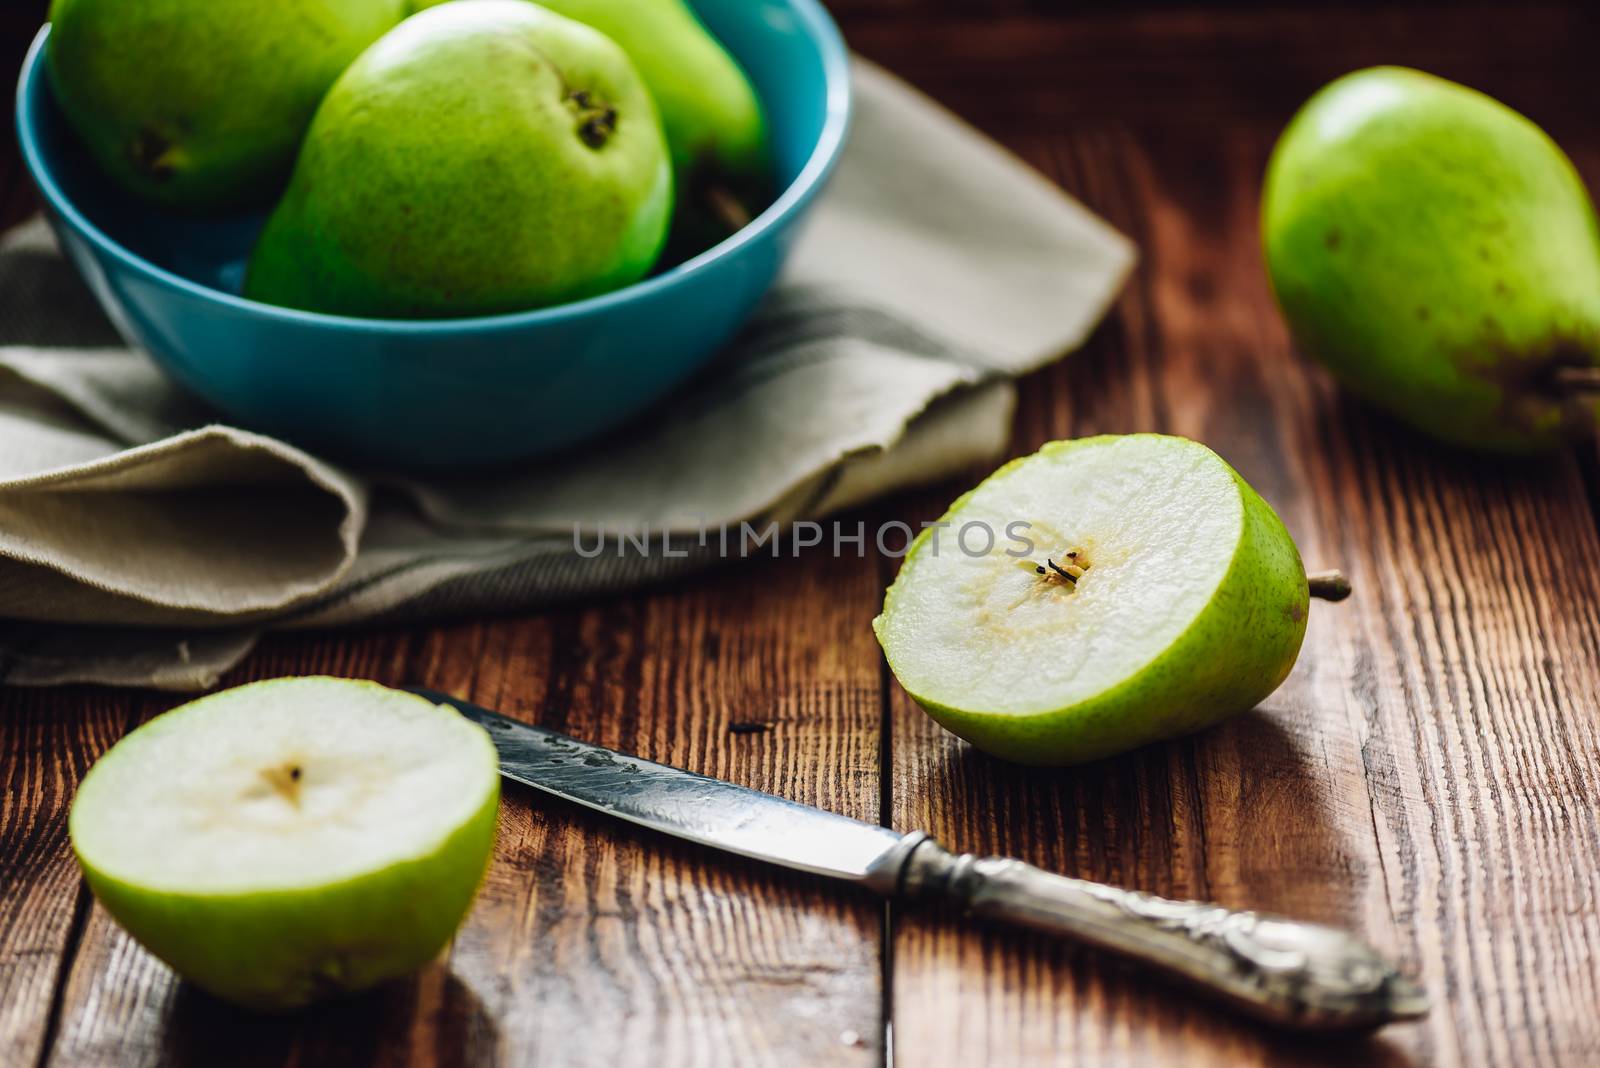 Sliced Pear with Knife. by Seva_blsv